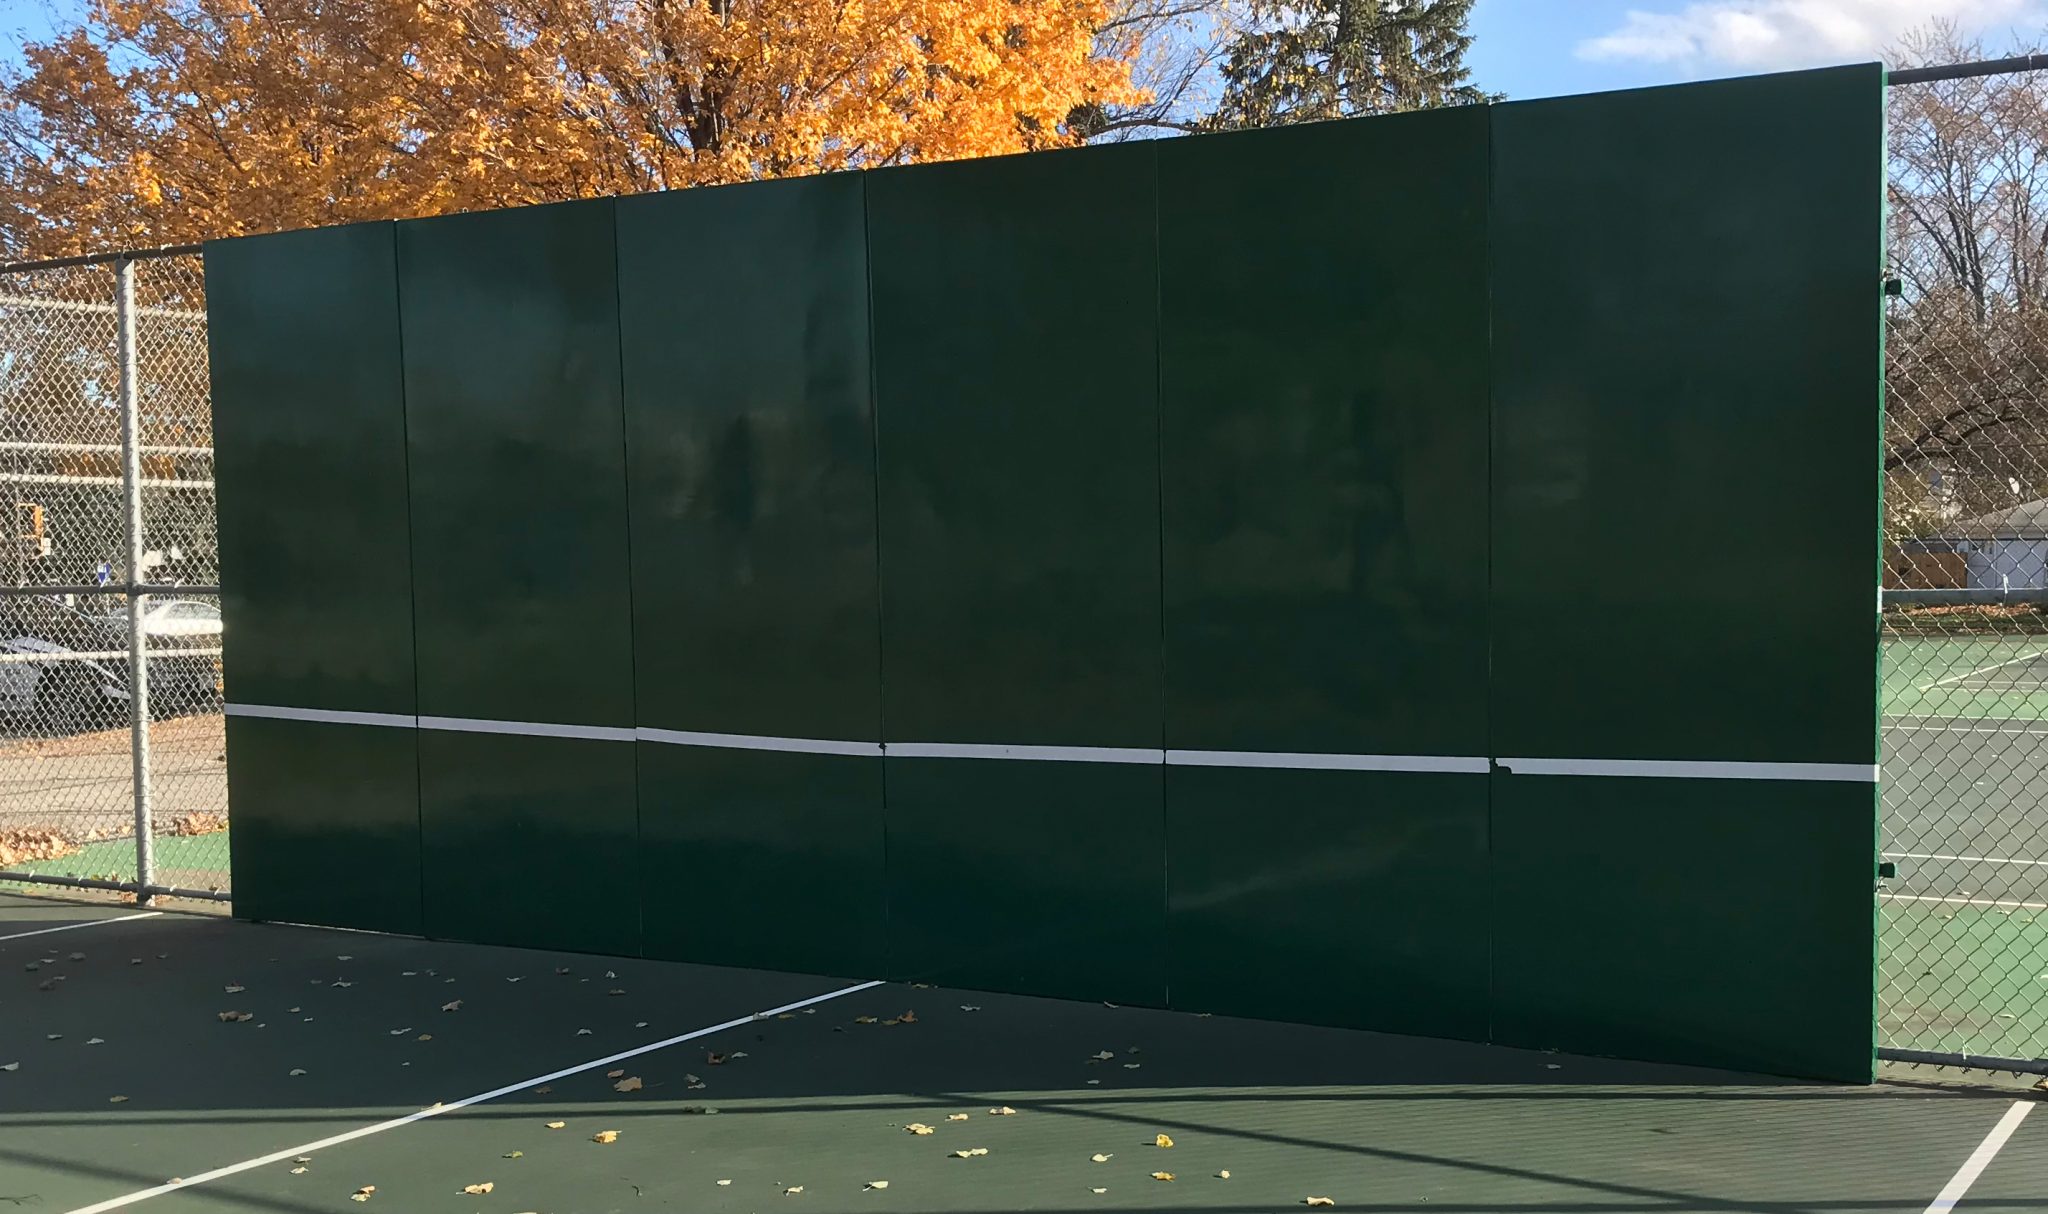 Bakko pro tennis backboard hitting wall